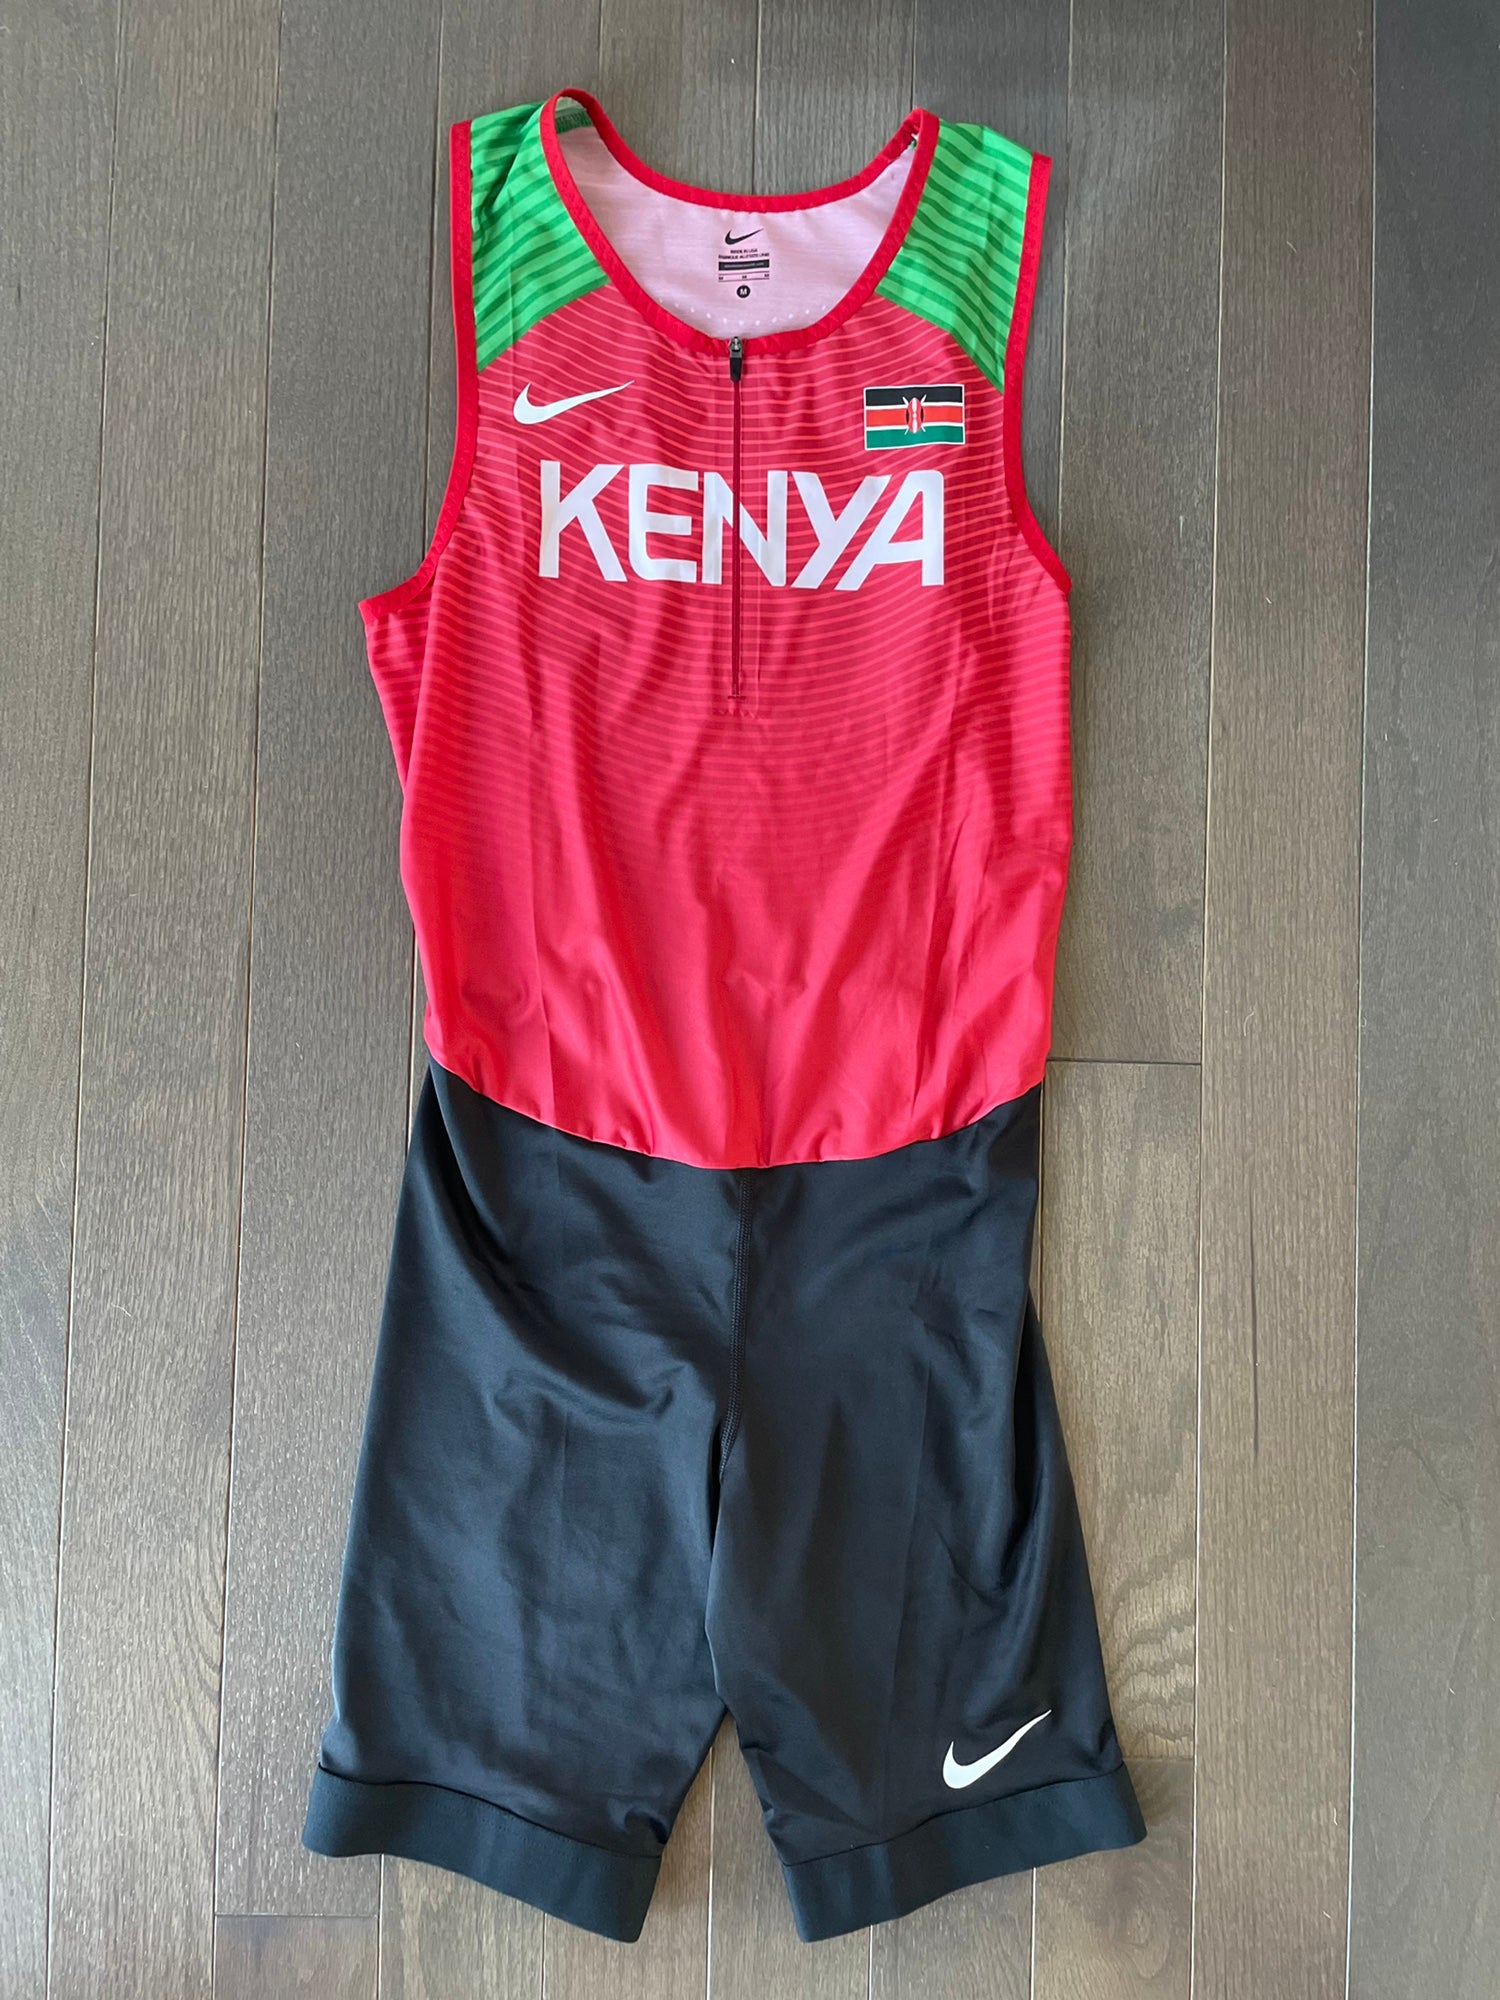 Nike Kenya Elite Pro Track and Field Speedsuit Men's Size Medium ...